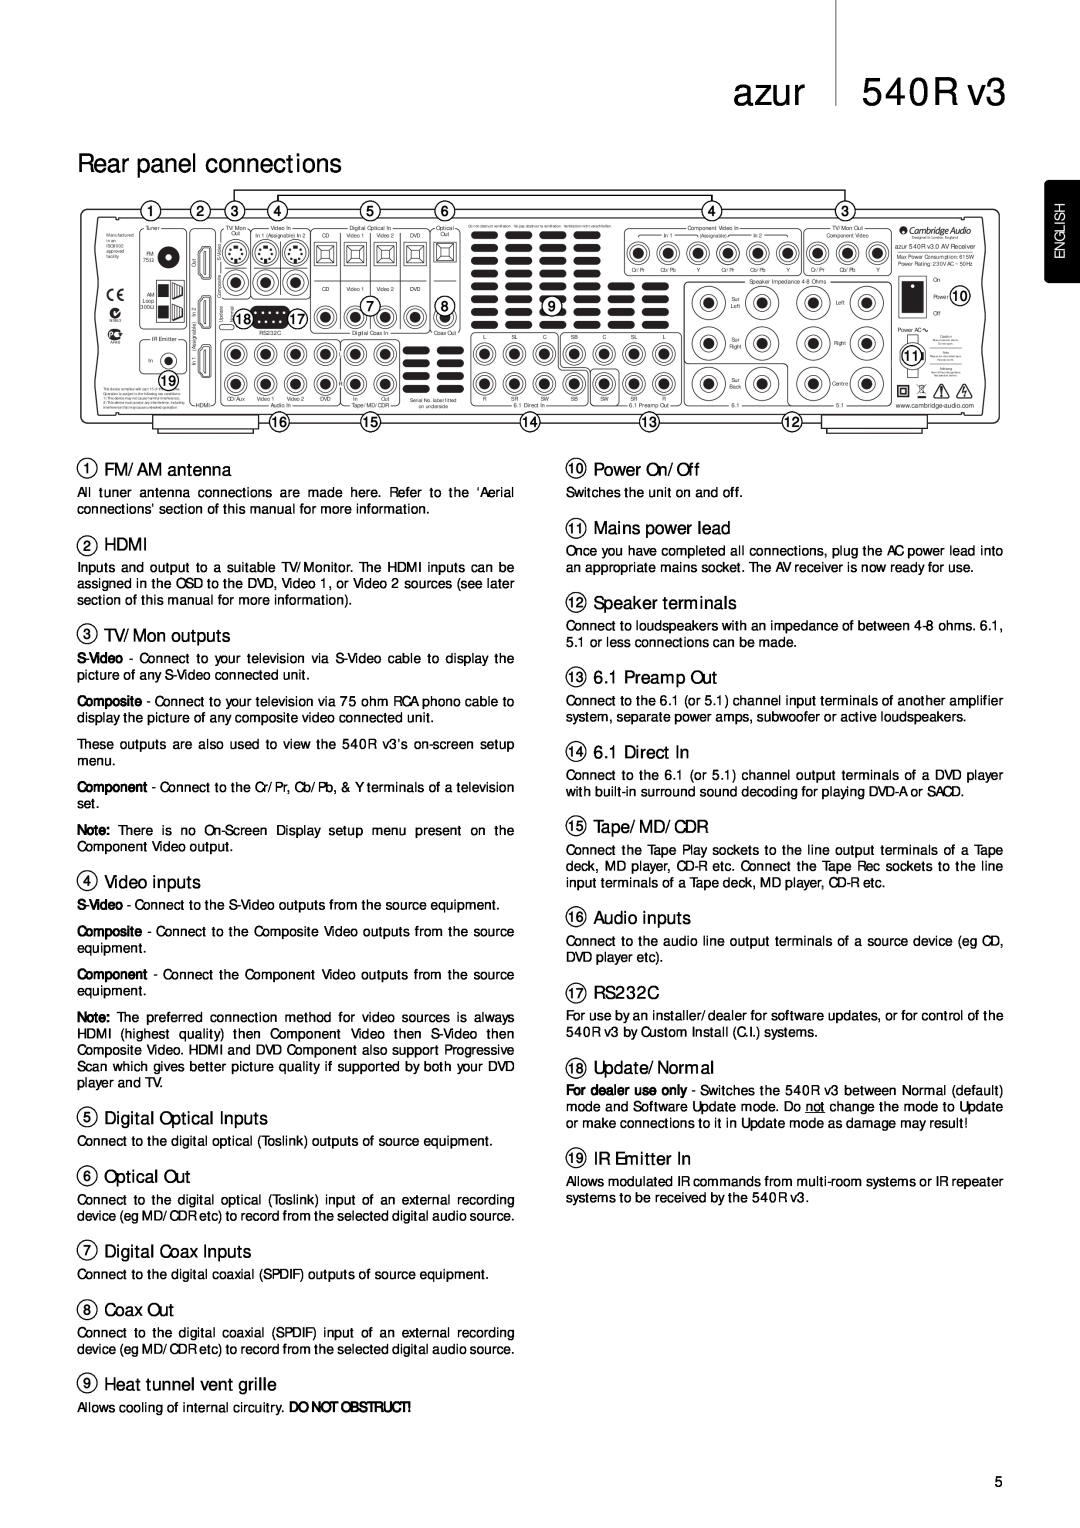 Cambridge Audio 540R V3 user manual Rear panel connections, azur 540R 